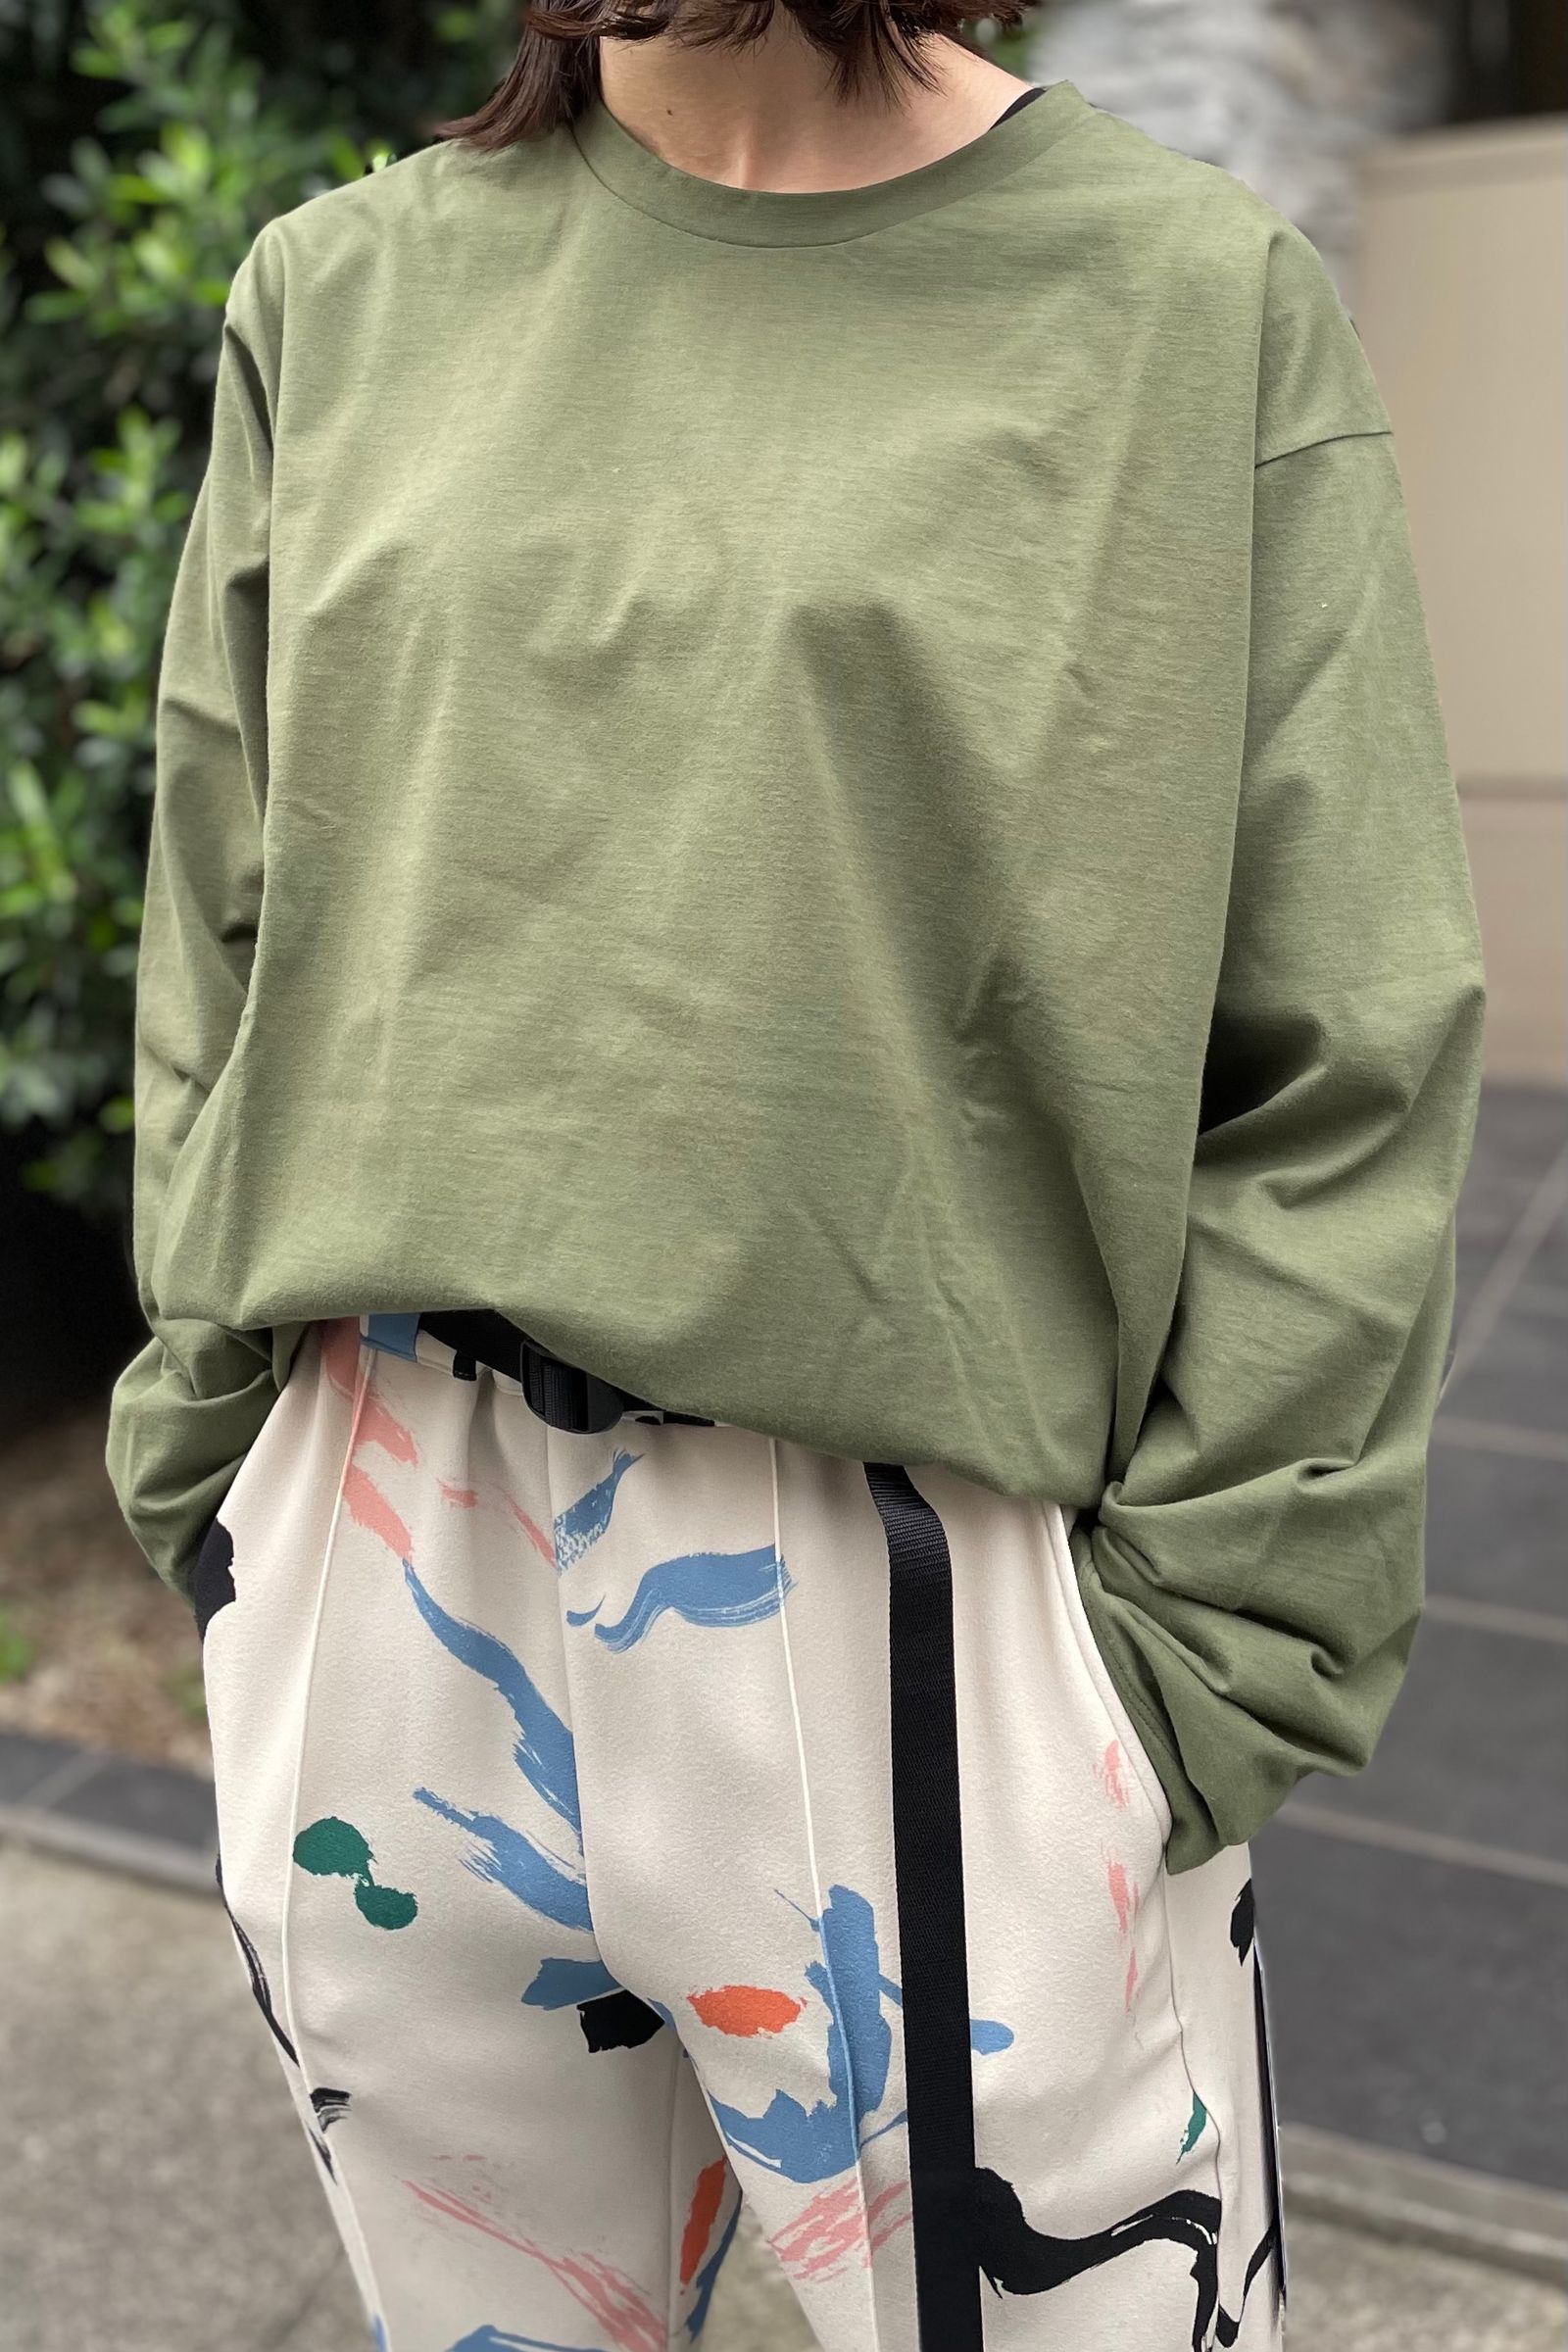 ATON - 【先行受注】shrink flannel easy pants -top grey- 22aw men